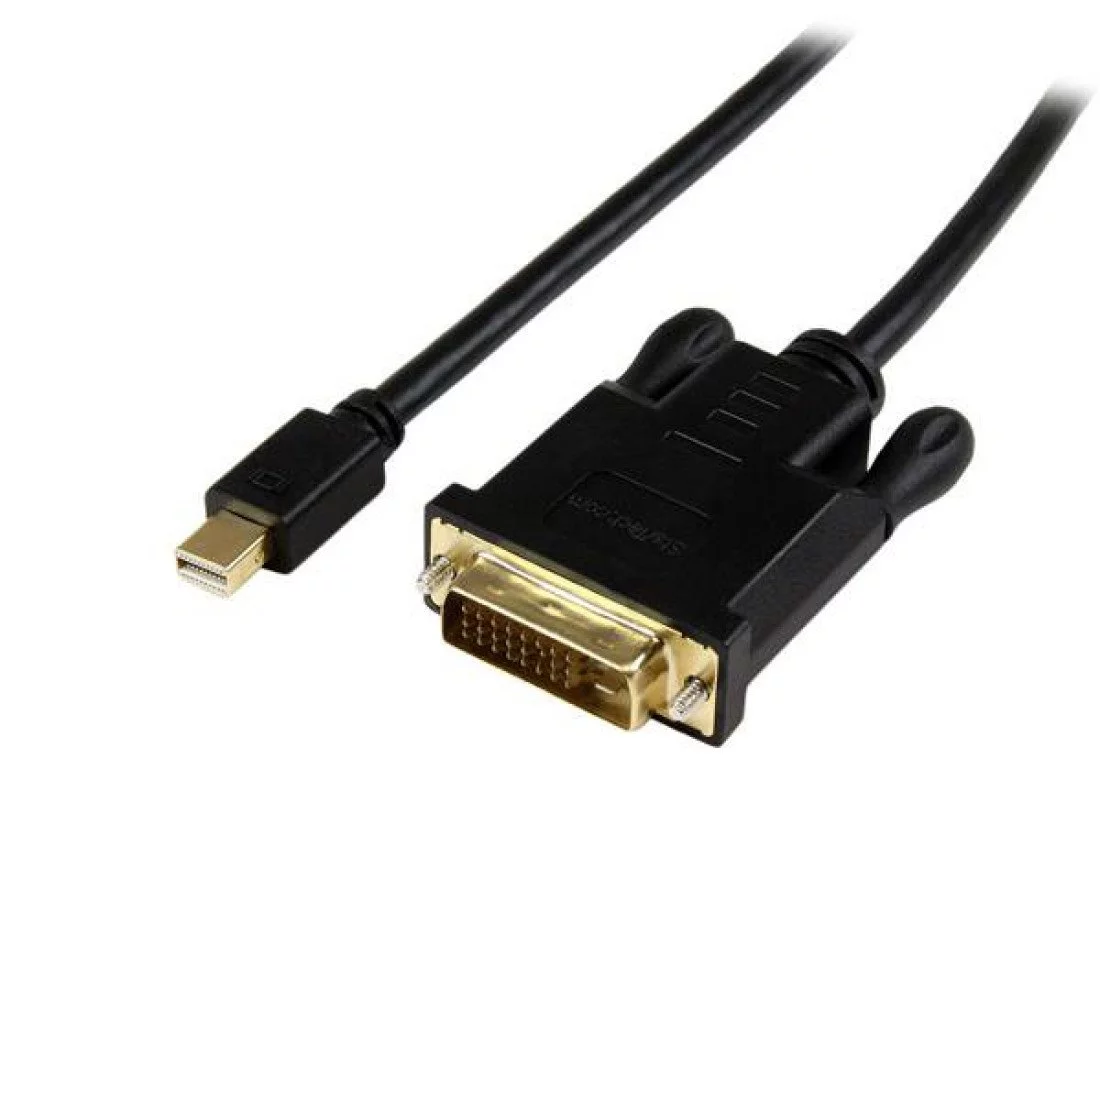 StarTech.com Adaptateur de voyage Mini DisplayPort vers DVI / DisplayPort /  HDMI - Convertisseur vidéo Mini DP 3-en-1 - Noir - adaptateur vidéo -  DisplayPort / HDMI / DVI - 15 cm